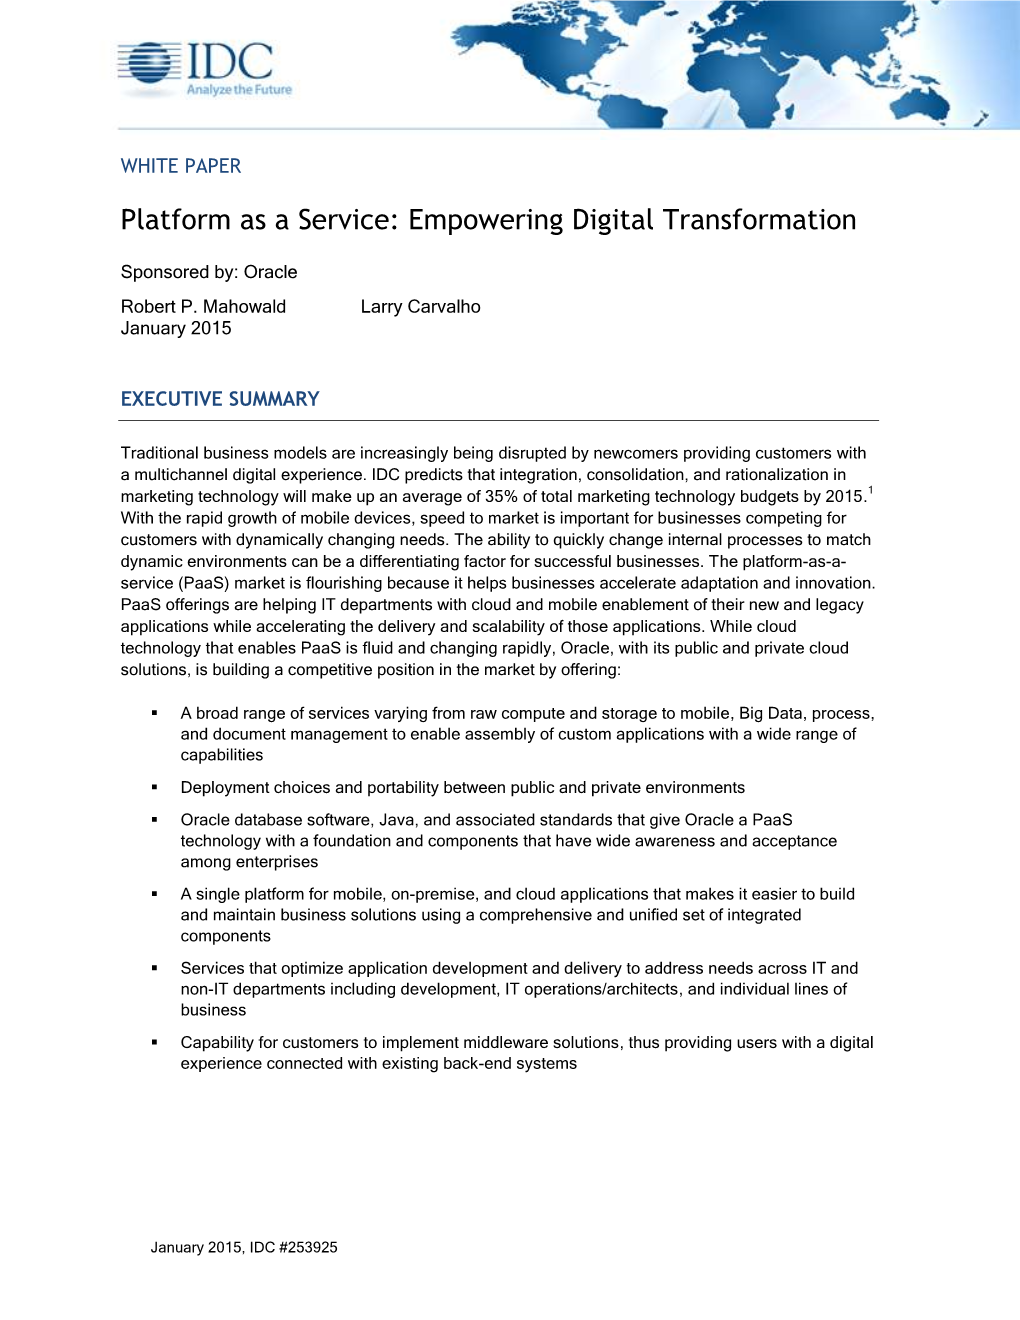 Platform As a Service: Empowering Digital Transformation